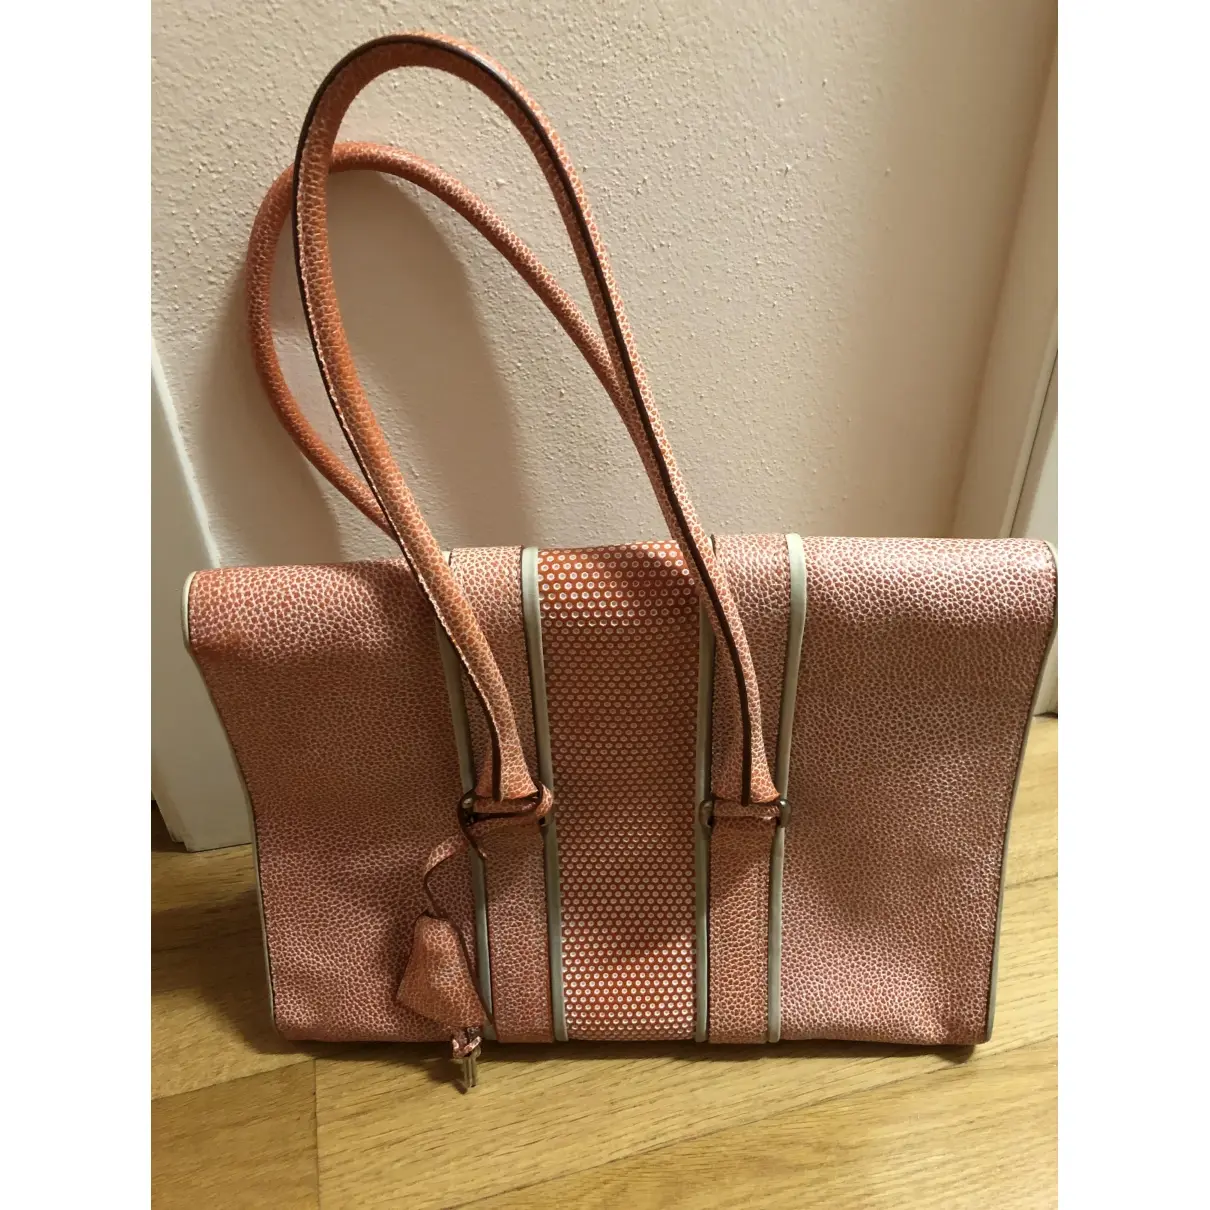 A. Testoni Leather handbag for sale